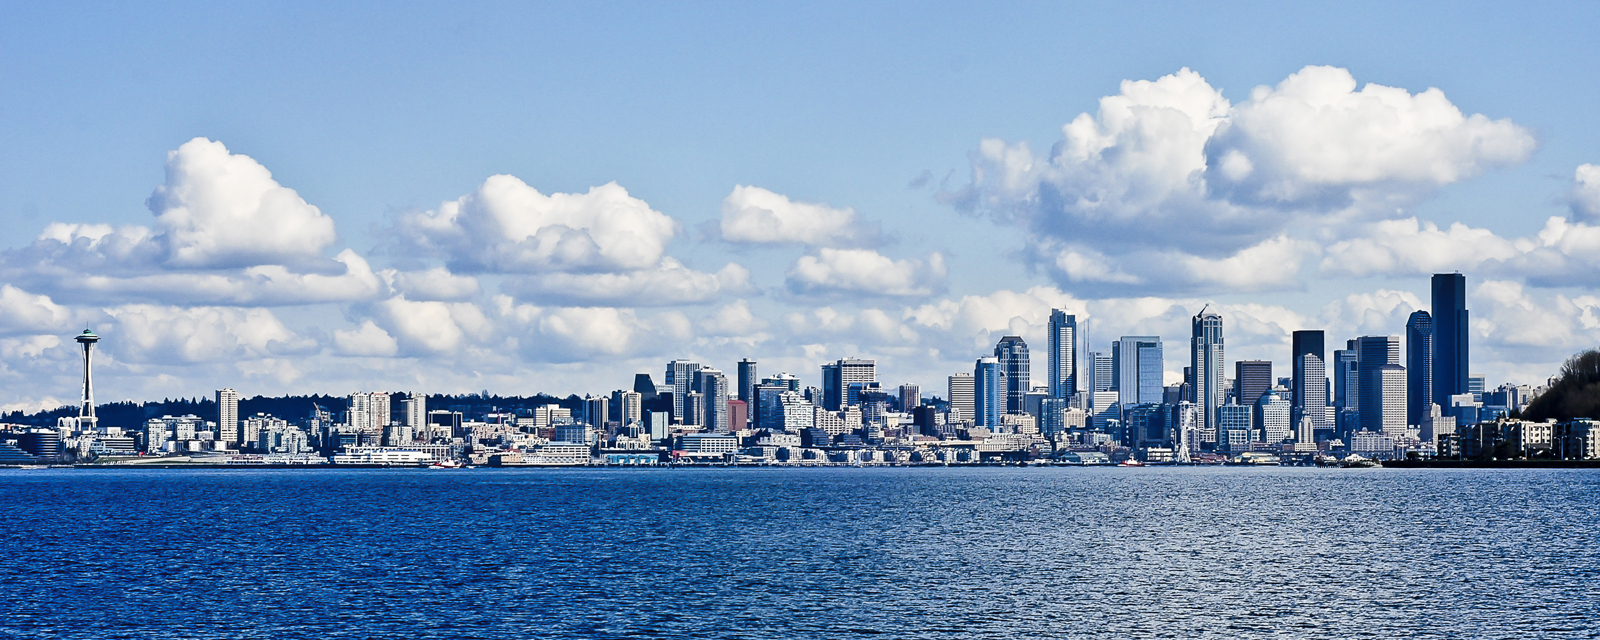 02_Seattle Skyline